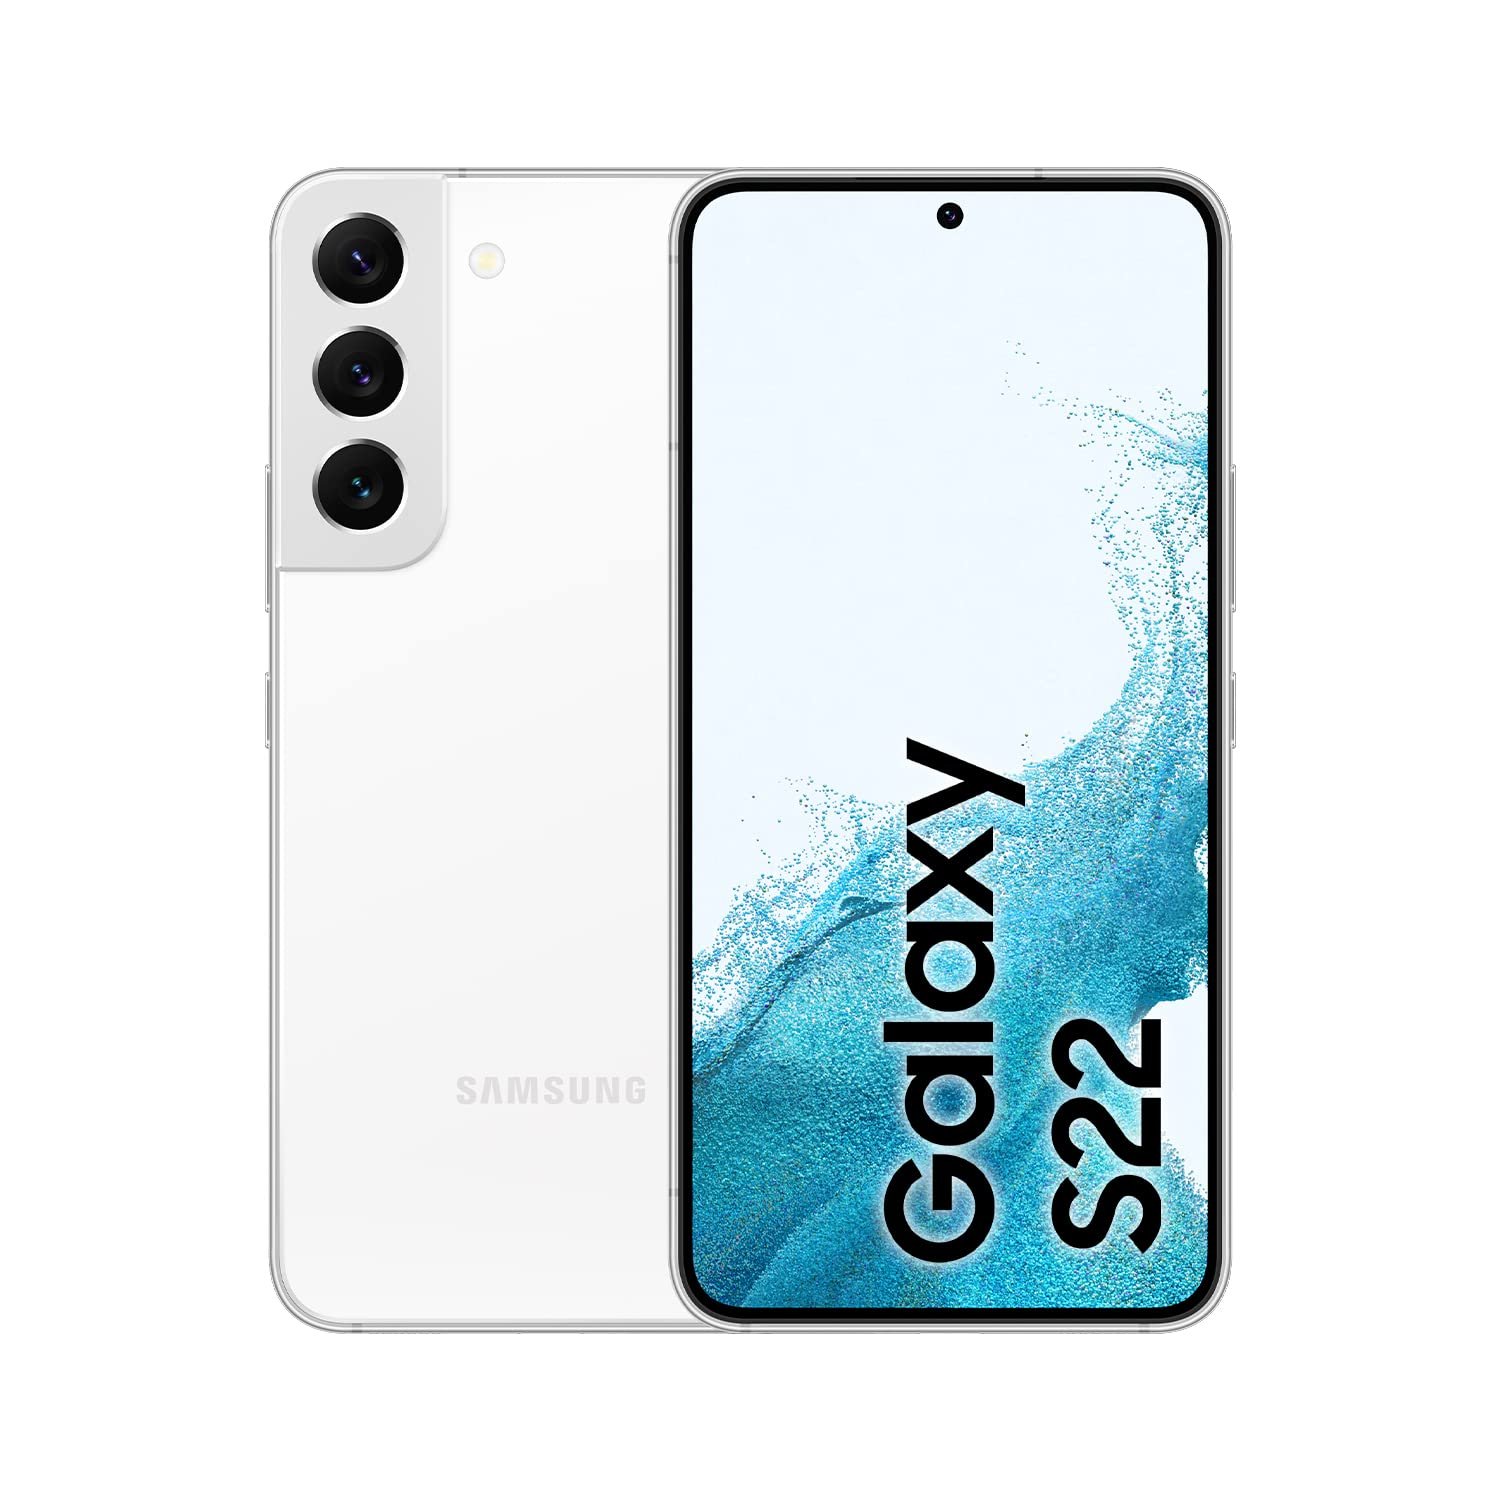 https://pc-tablet.com/wp-content/uploads/2022/11/Samsung-Galaxy-S22.jpg